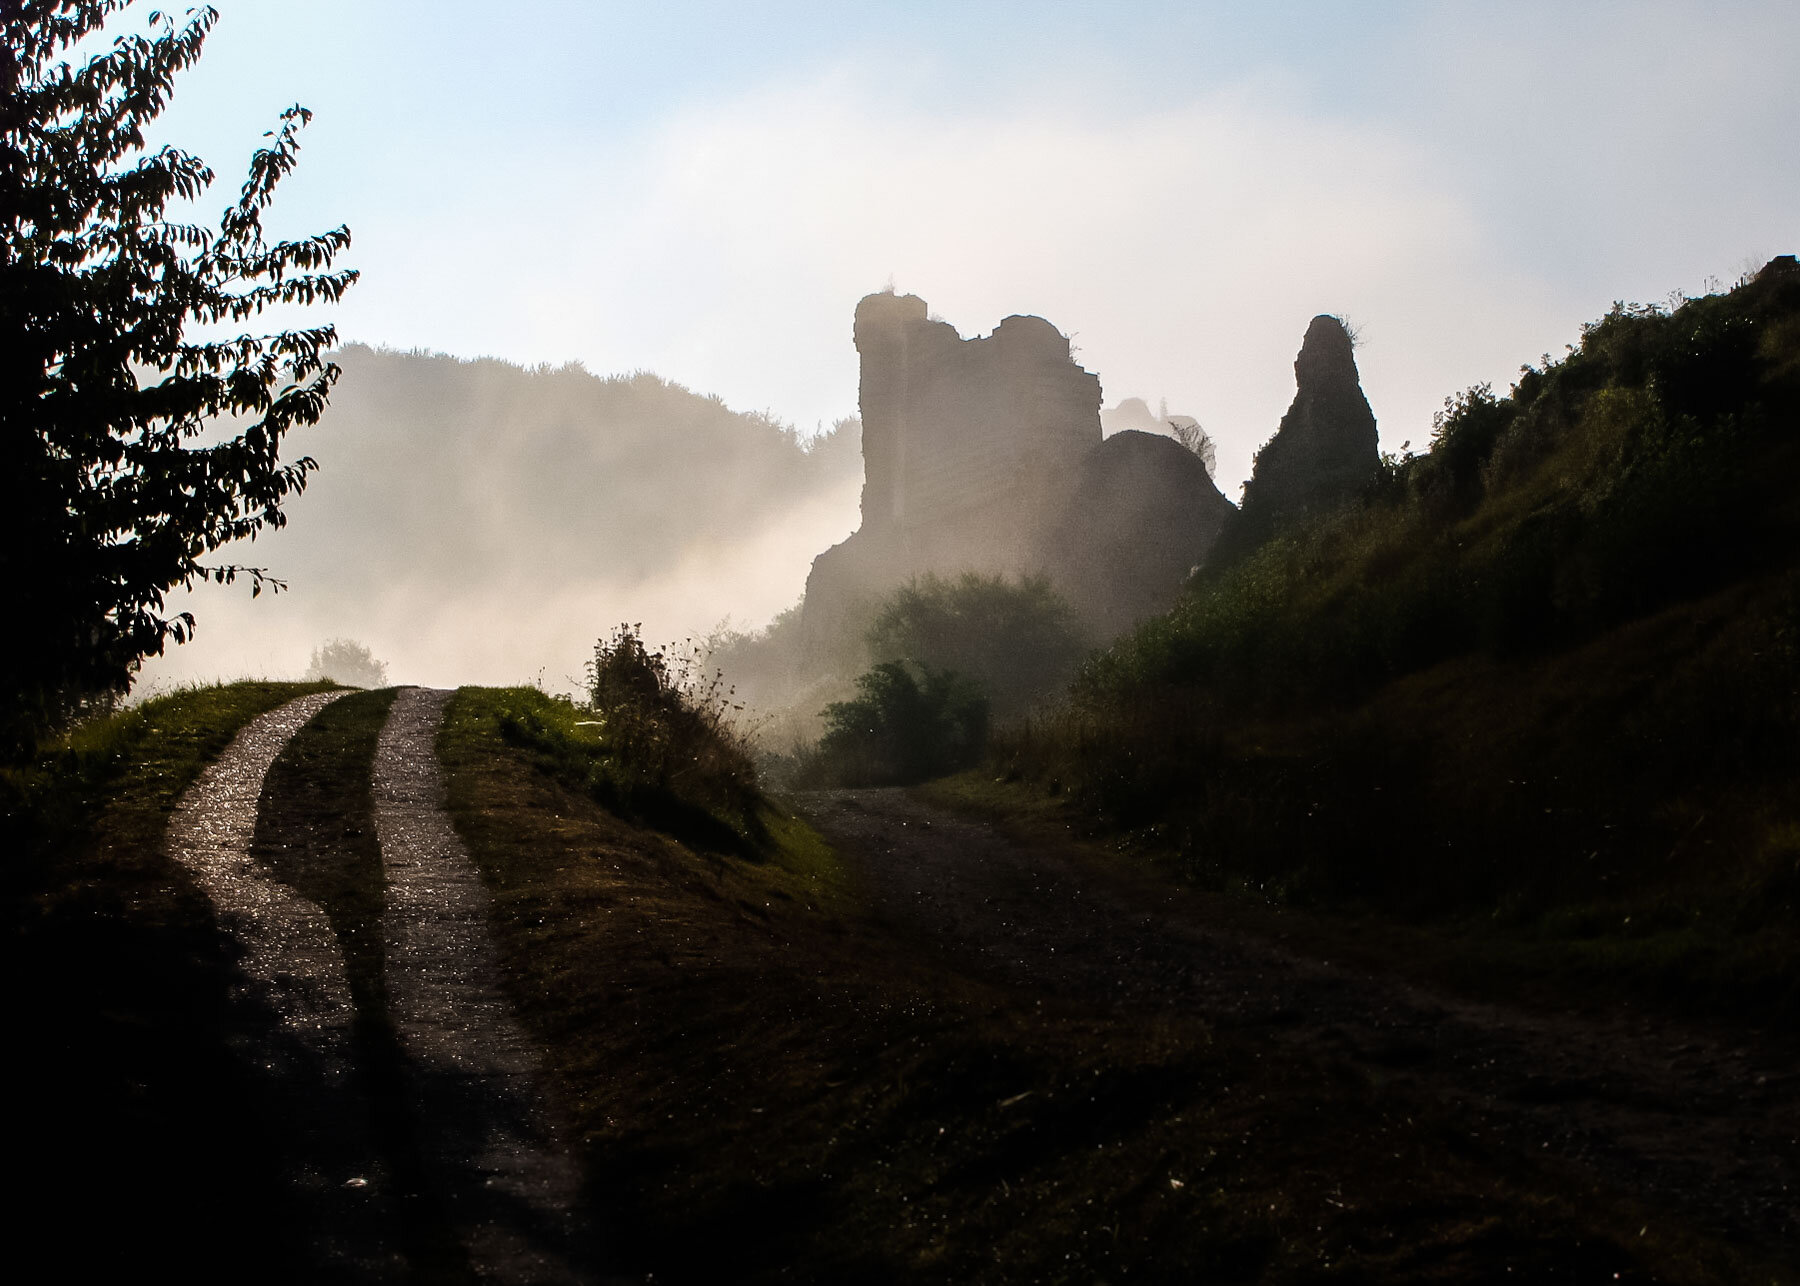 Sunrise mist at Château Gaillard, the medieval castle ruins at Les Andelys